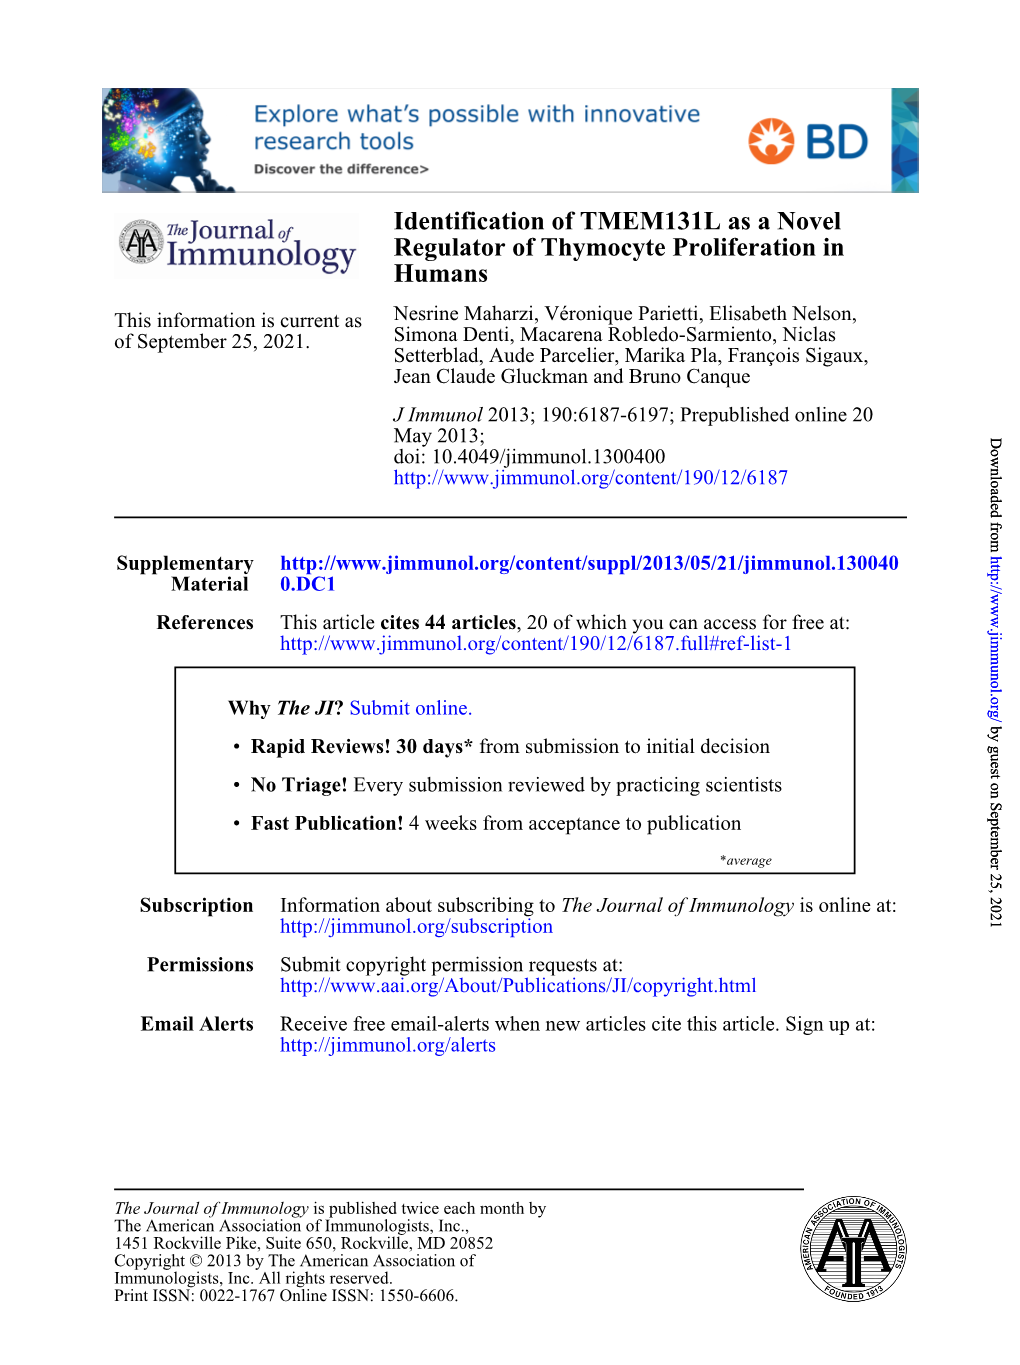 Identification of TMEM131L As a Novel Regulator of Thymocyte Proliferation in Humans